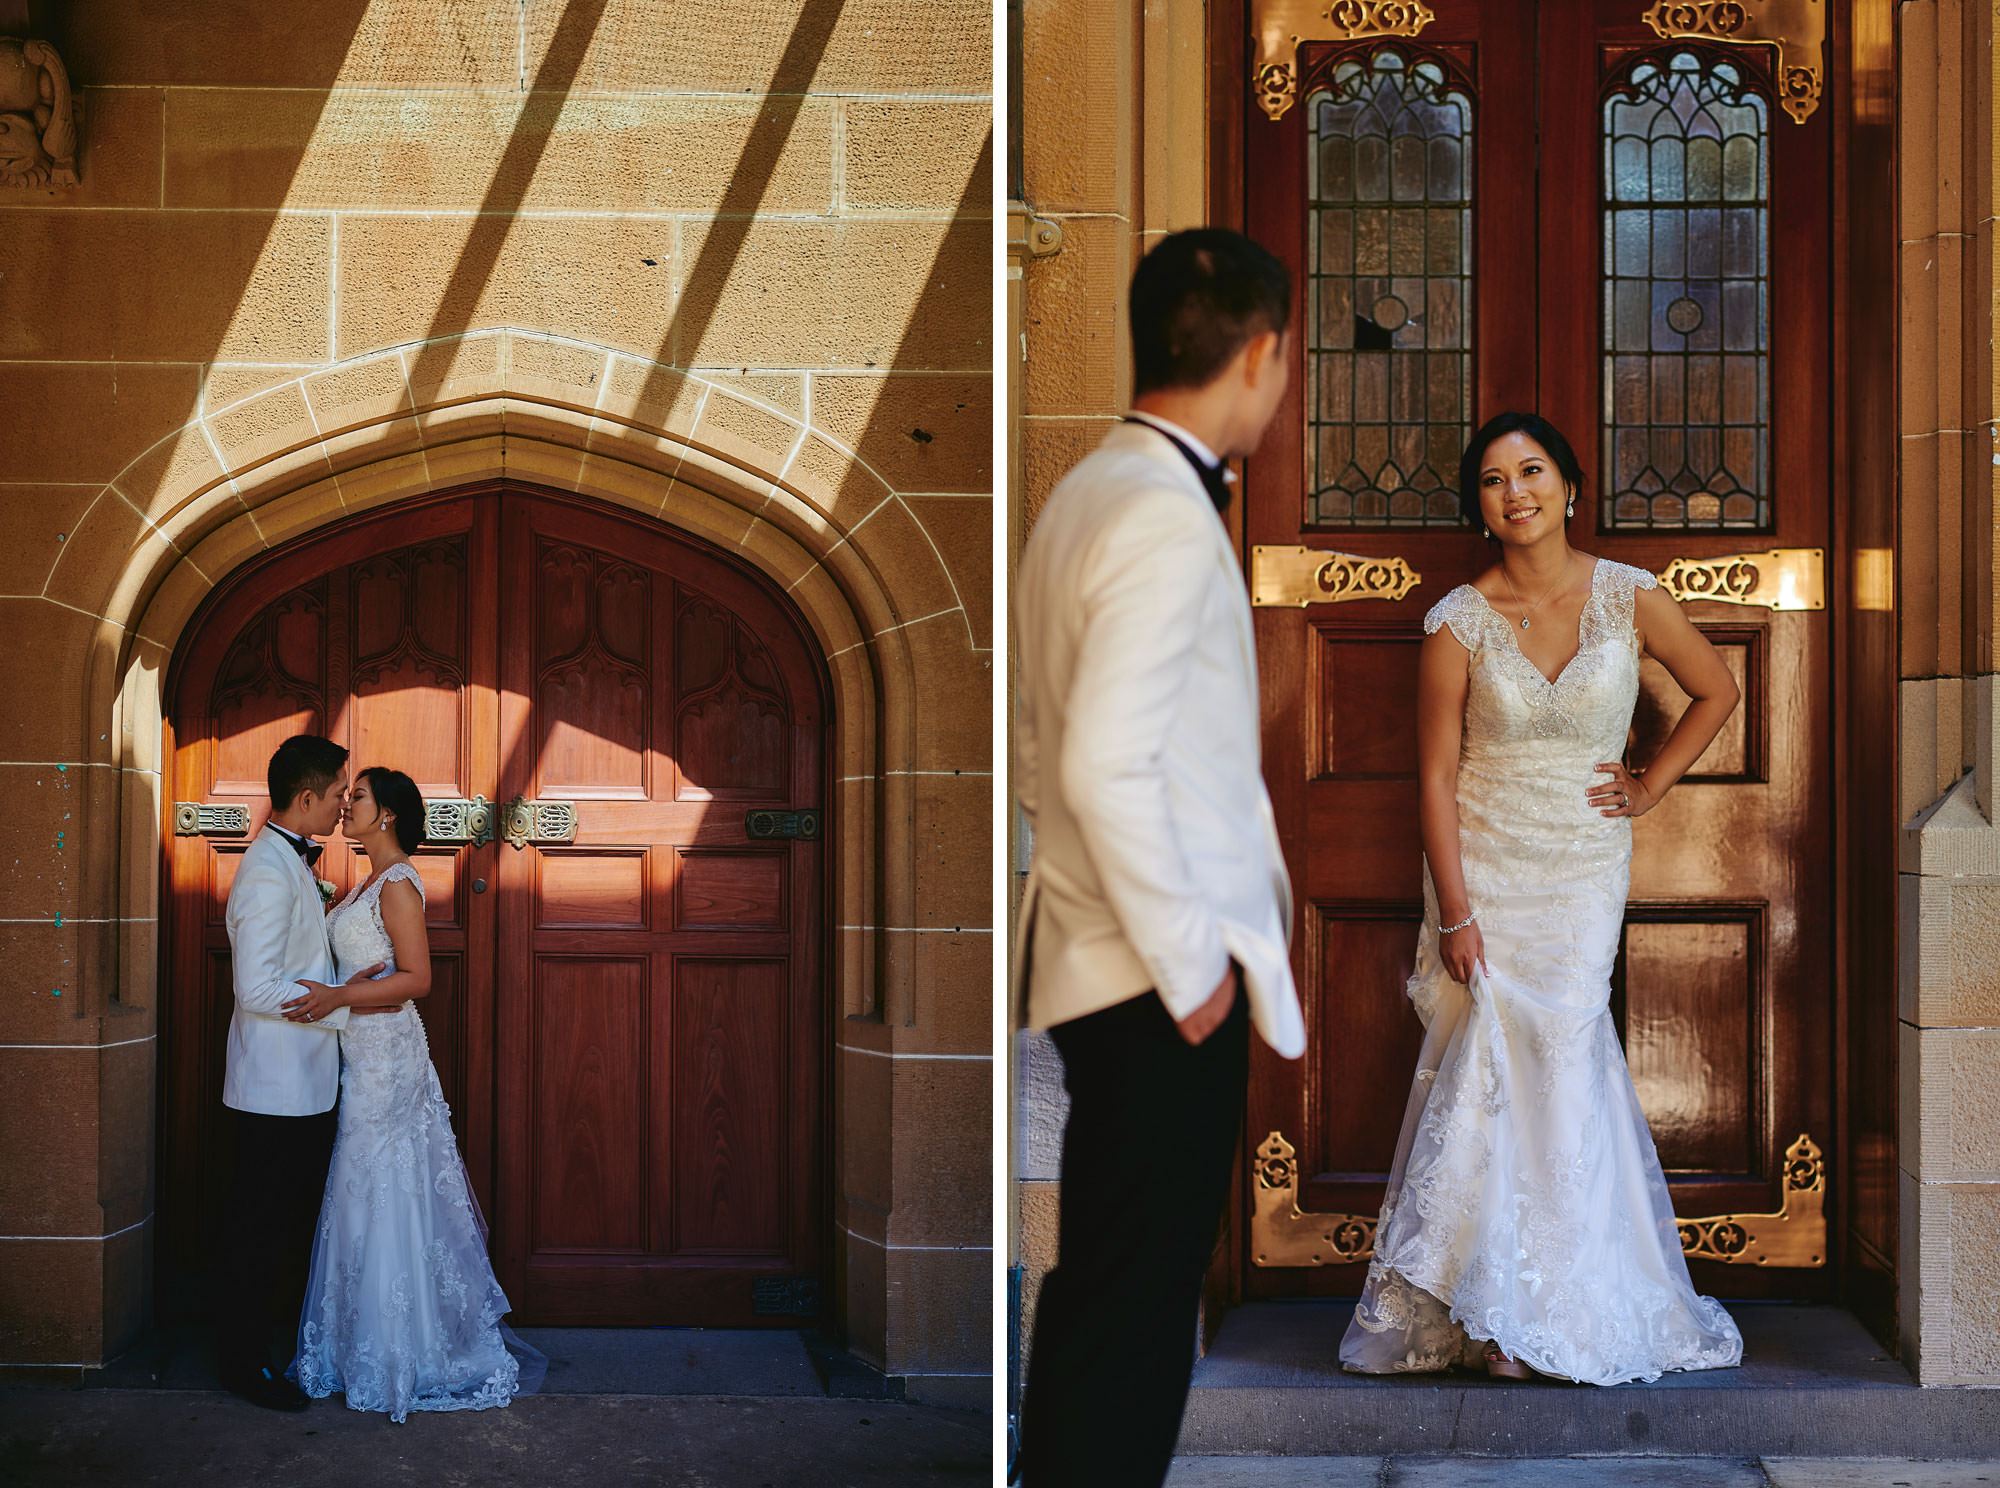 Vu and Vivian wedding photos at Sydney Uni